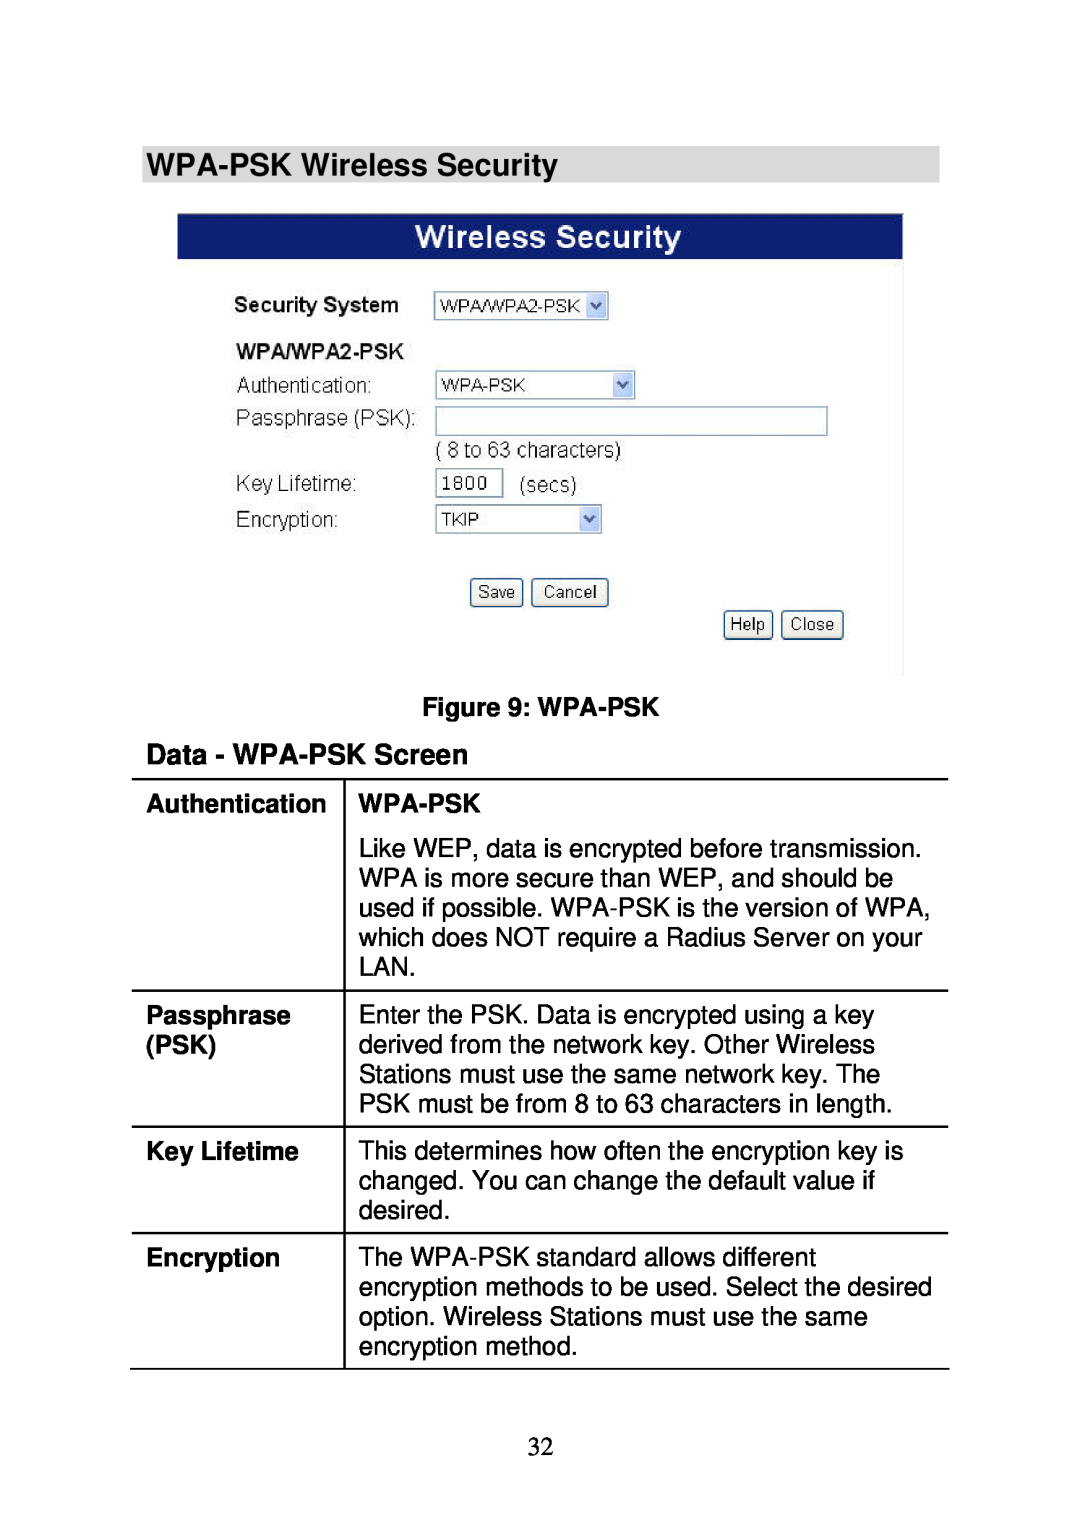 3Com WBR-6000 WPA-PSK Wireless Security, Data - WPA-PSK Screen, Wpa-Psk, Authentication, Key Lifetime, Encryption 